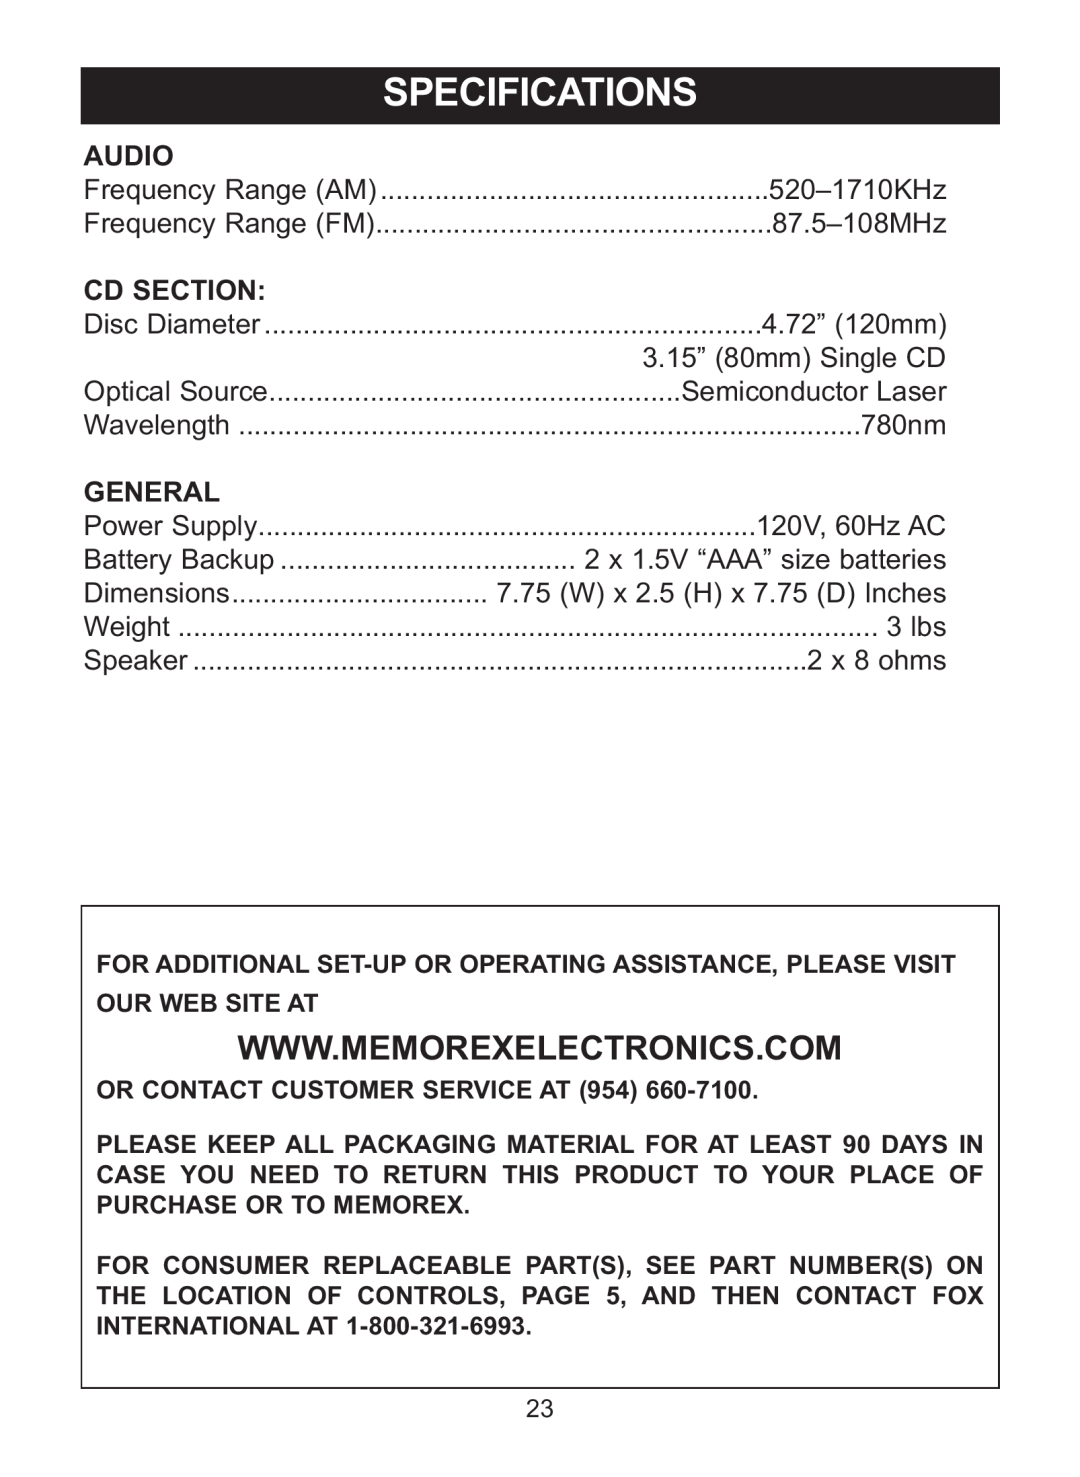 Memorex MC2864 manual Specifications, Www.Memorexelectronics.Com, Audio 